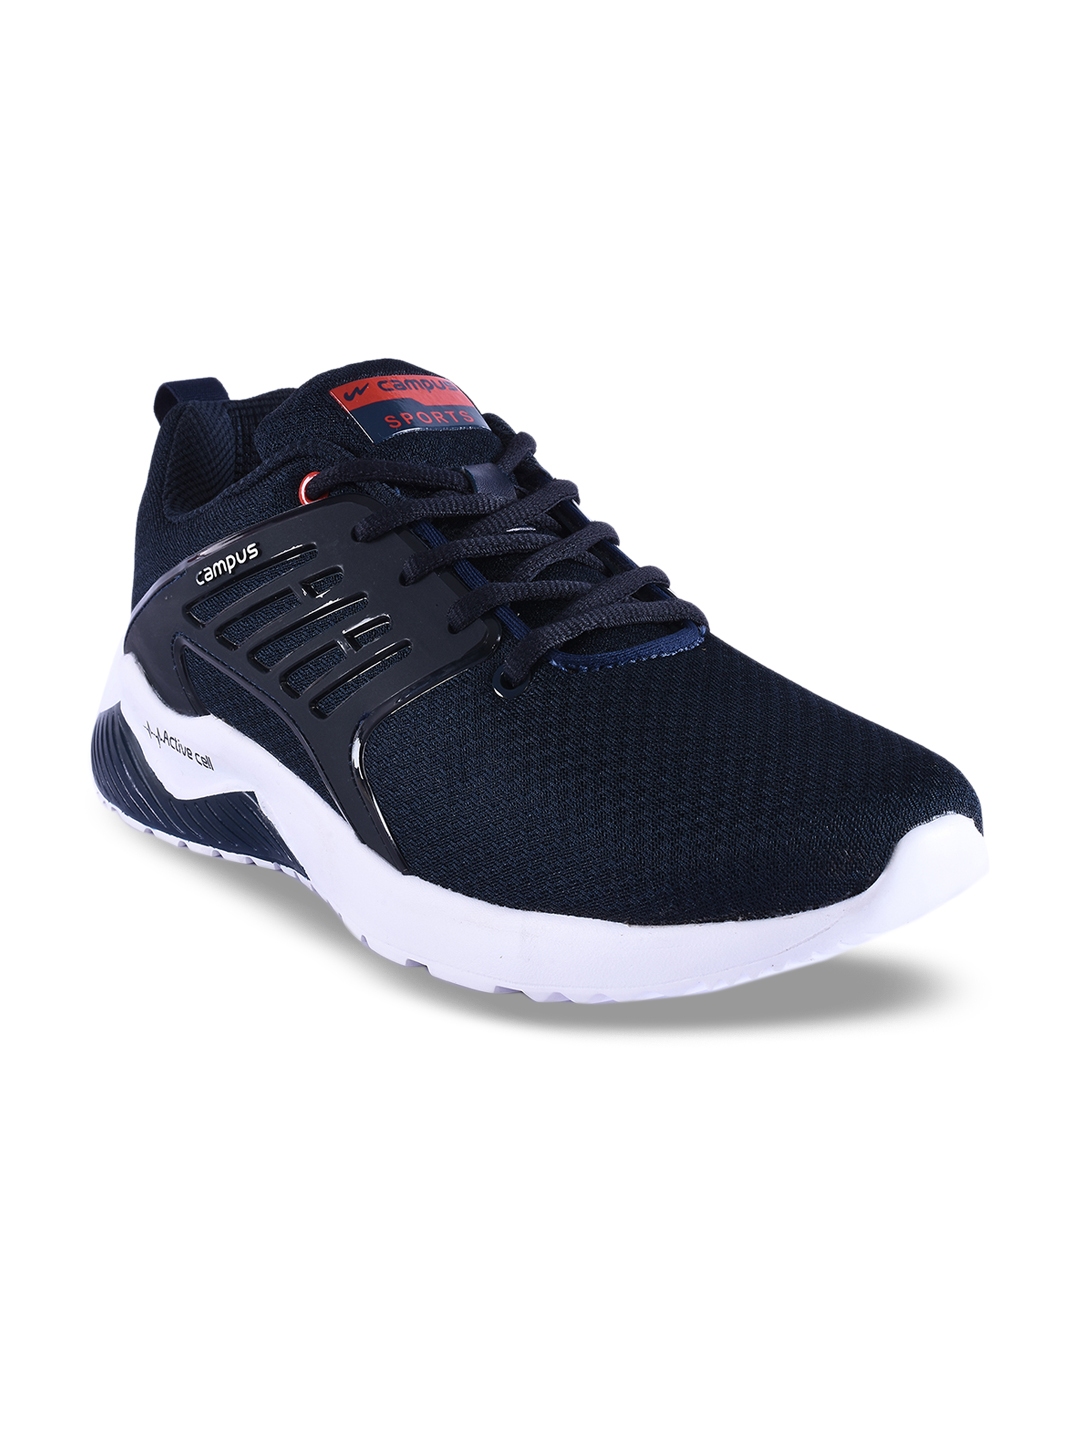 navy blue running shoes mens